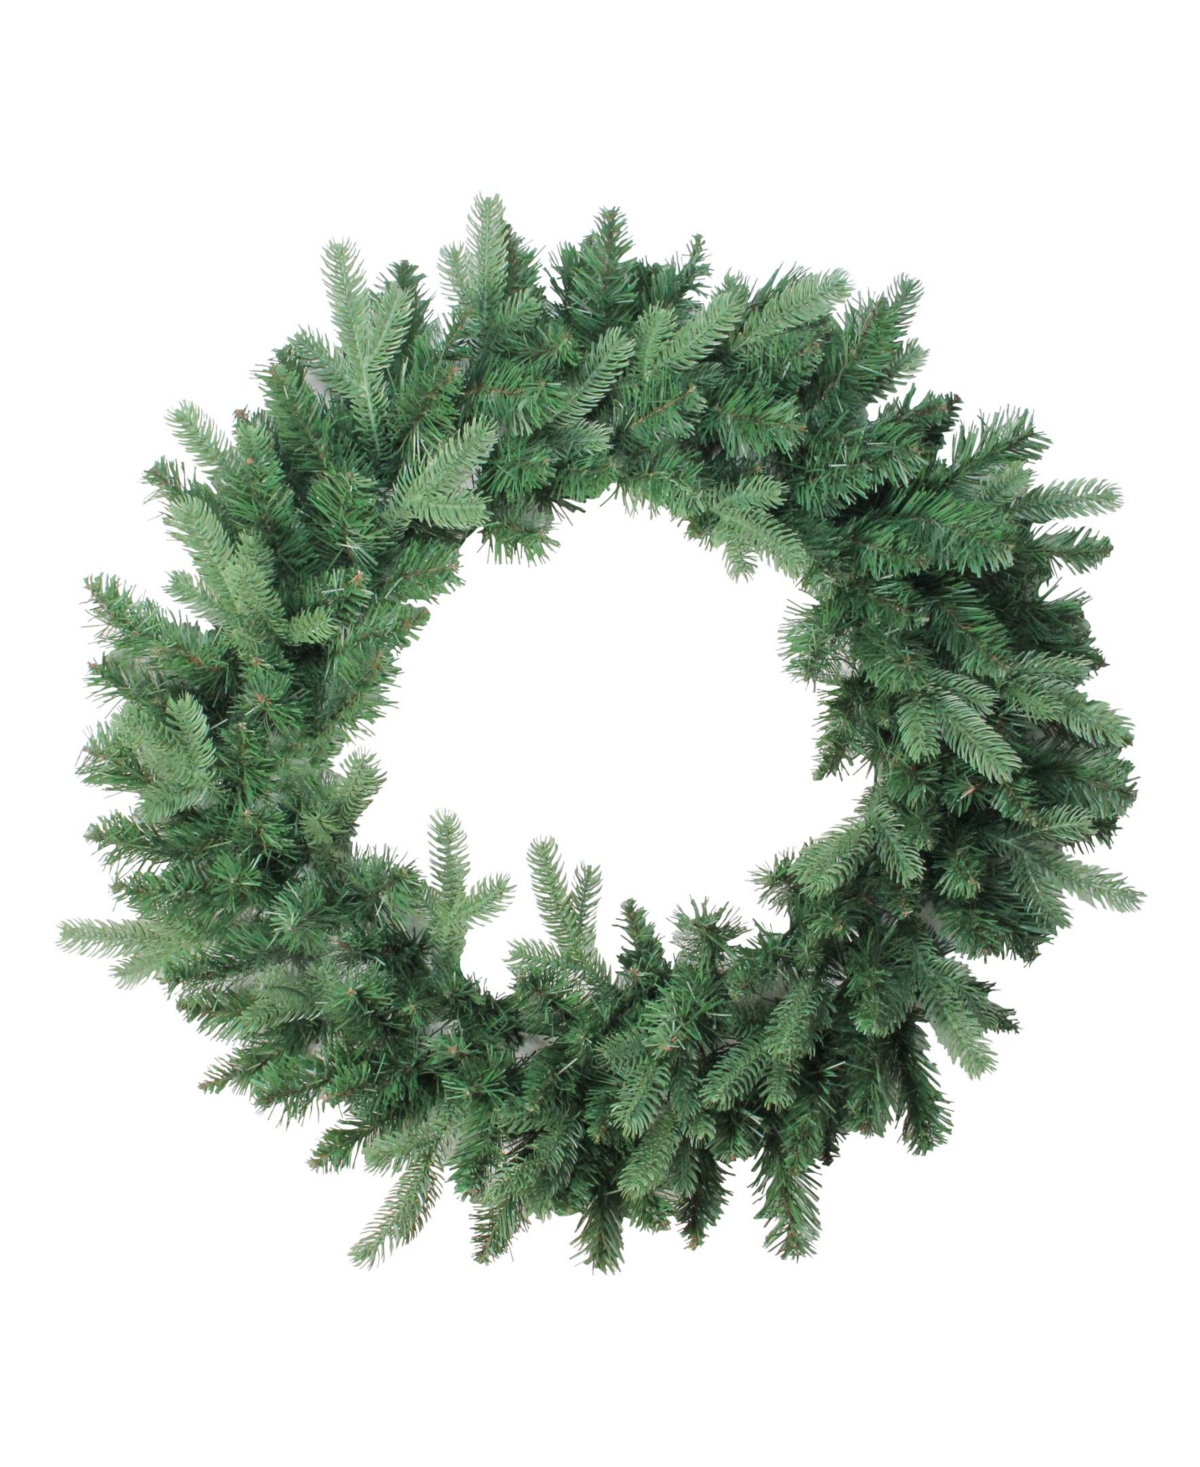 30" Coniferous Mixed Pine Artificial Christmas Wreath - Unlit - Green